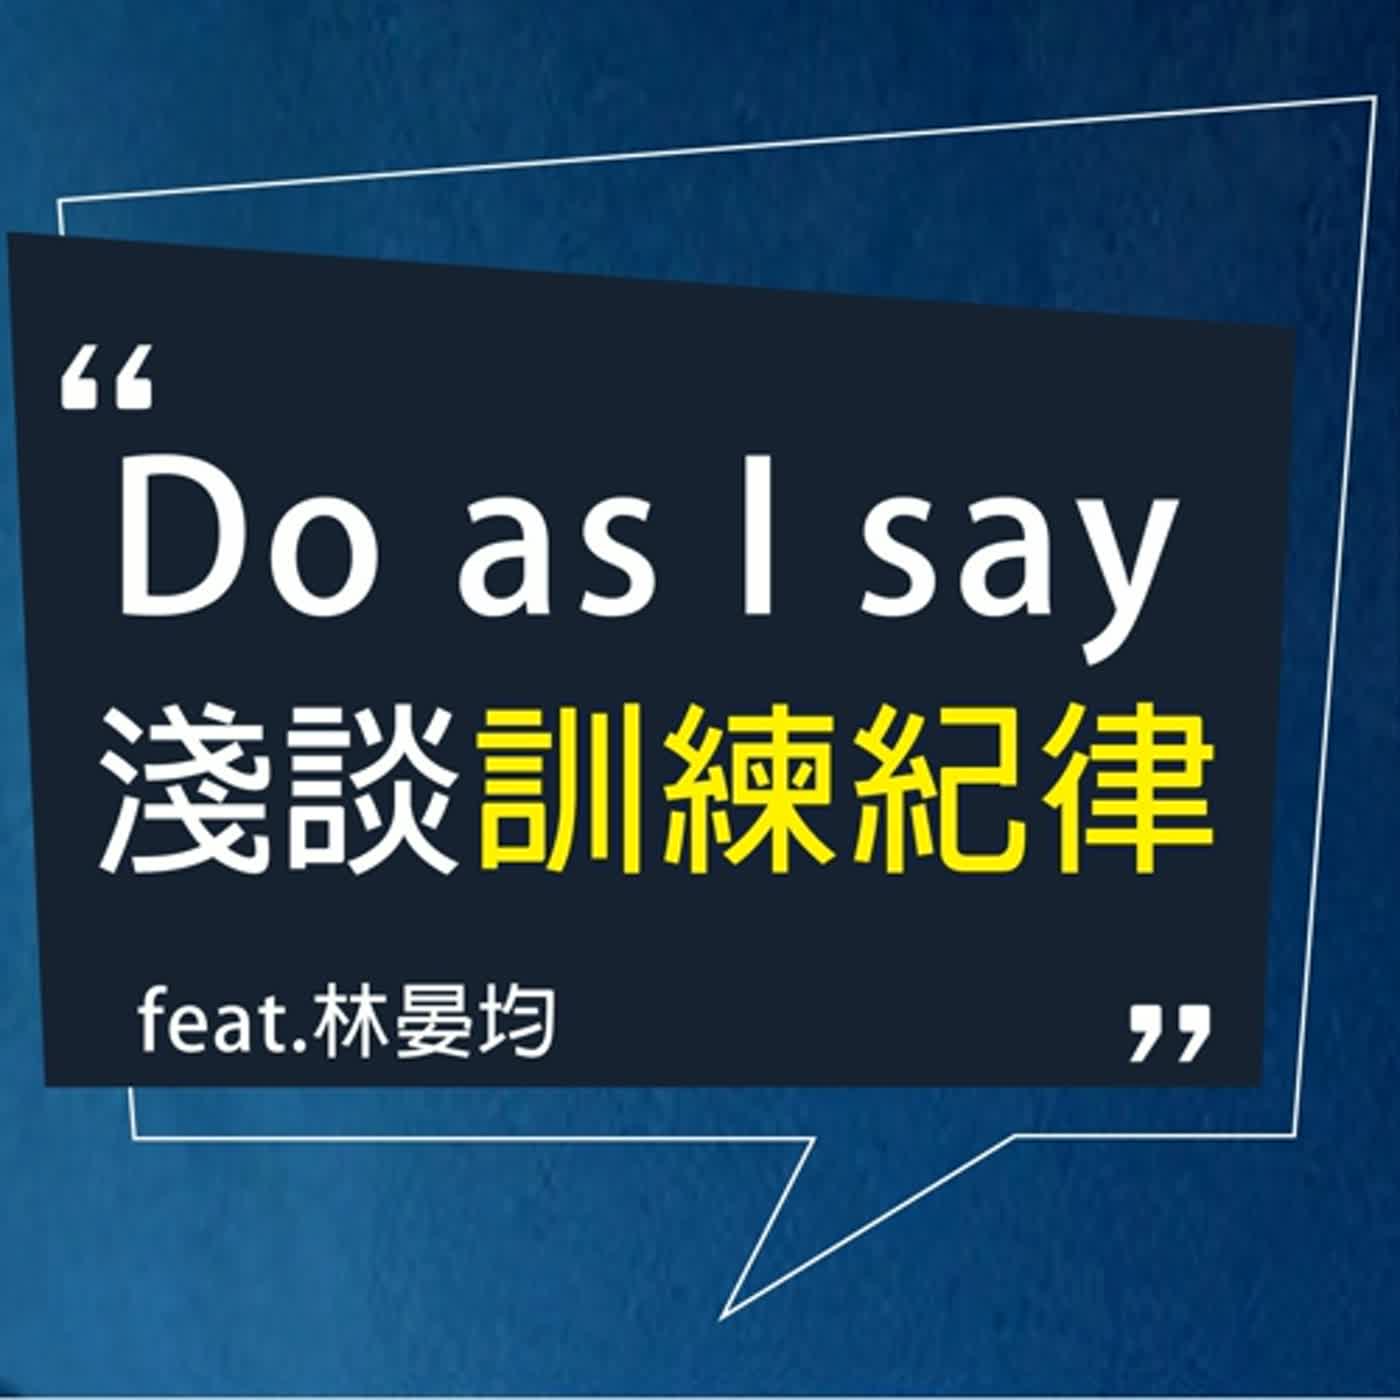 【S2E08】Do as I say -- 淺談訓練紀律 (feat. 林晏均)